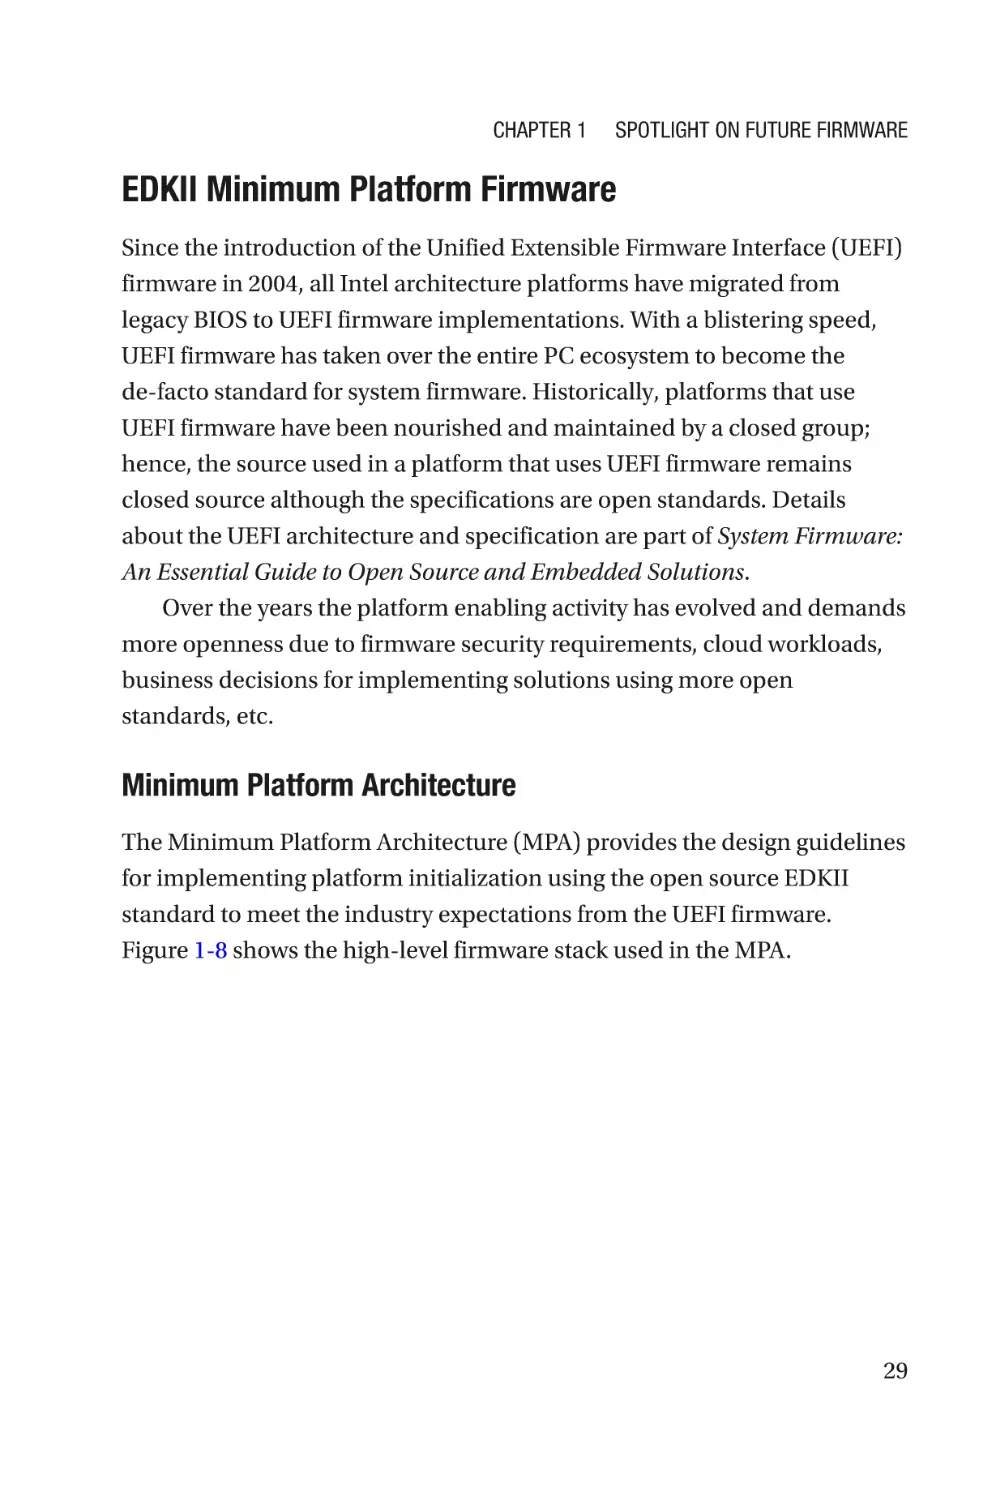 EDKII Minimum Platform Firmware
Minimum Platform Architecture